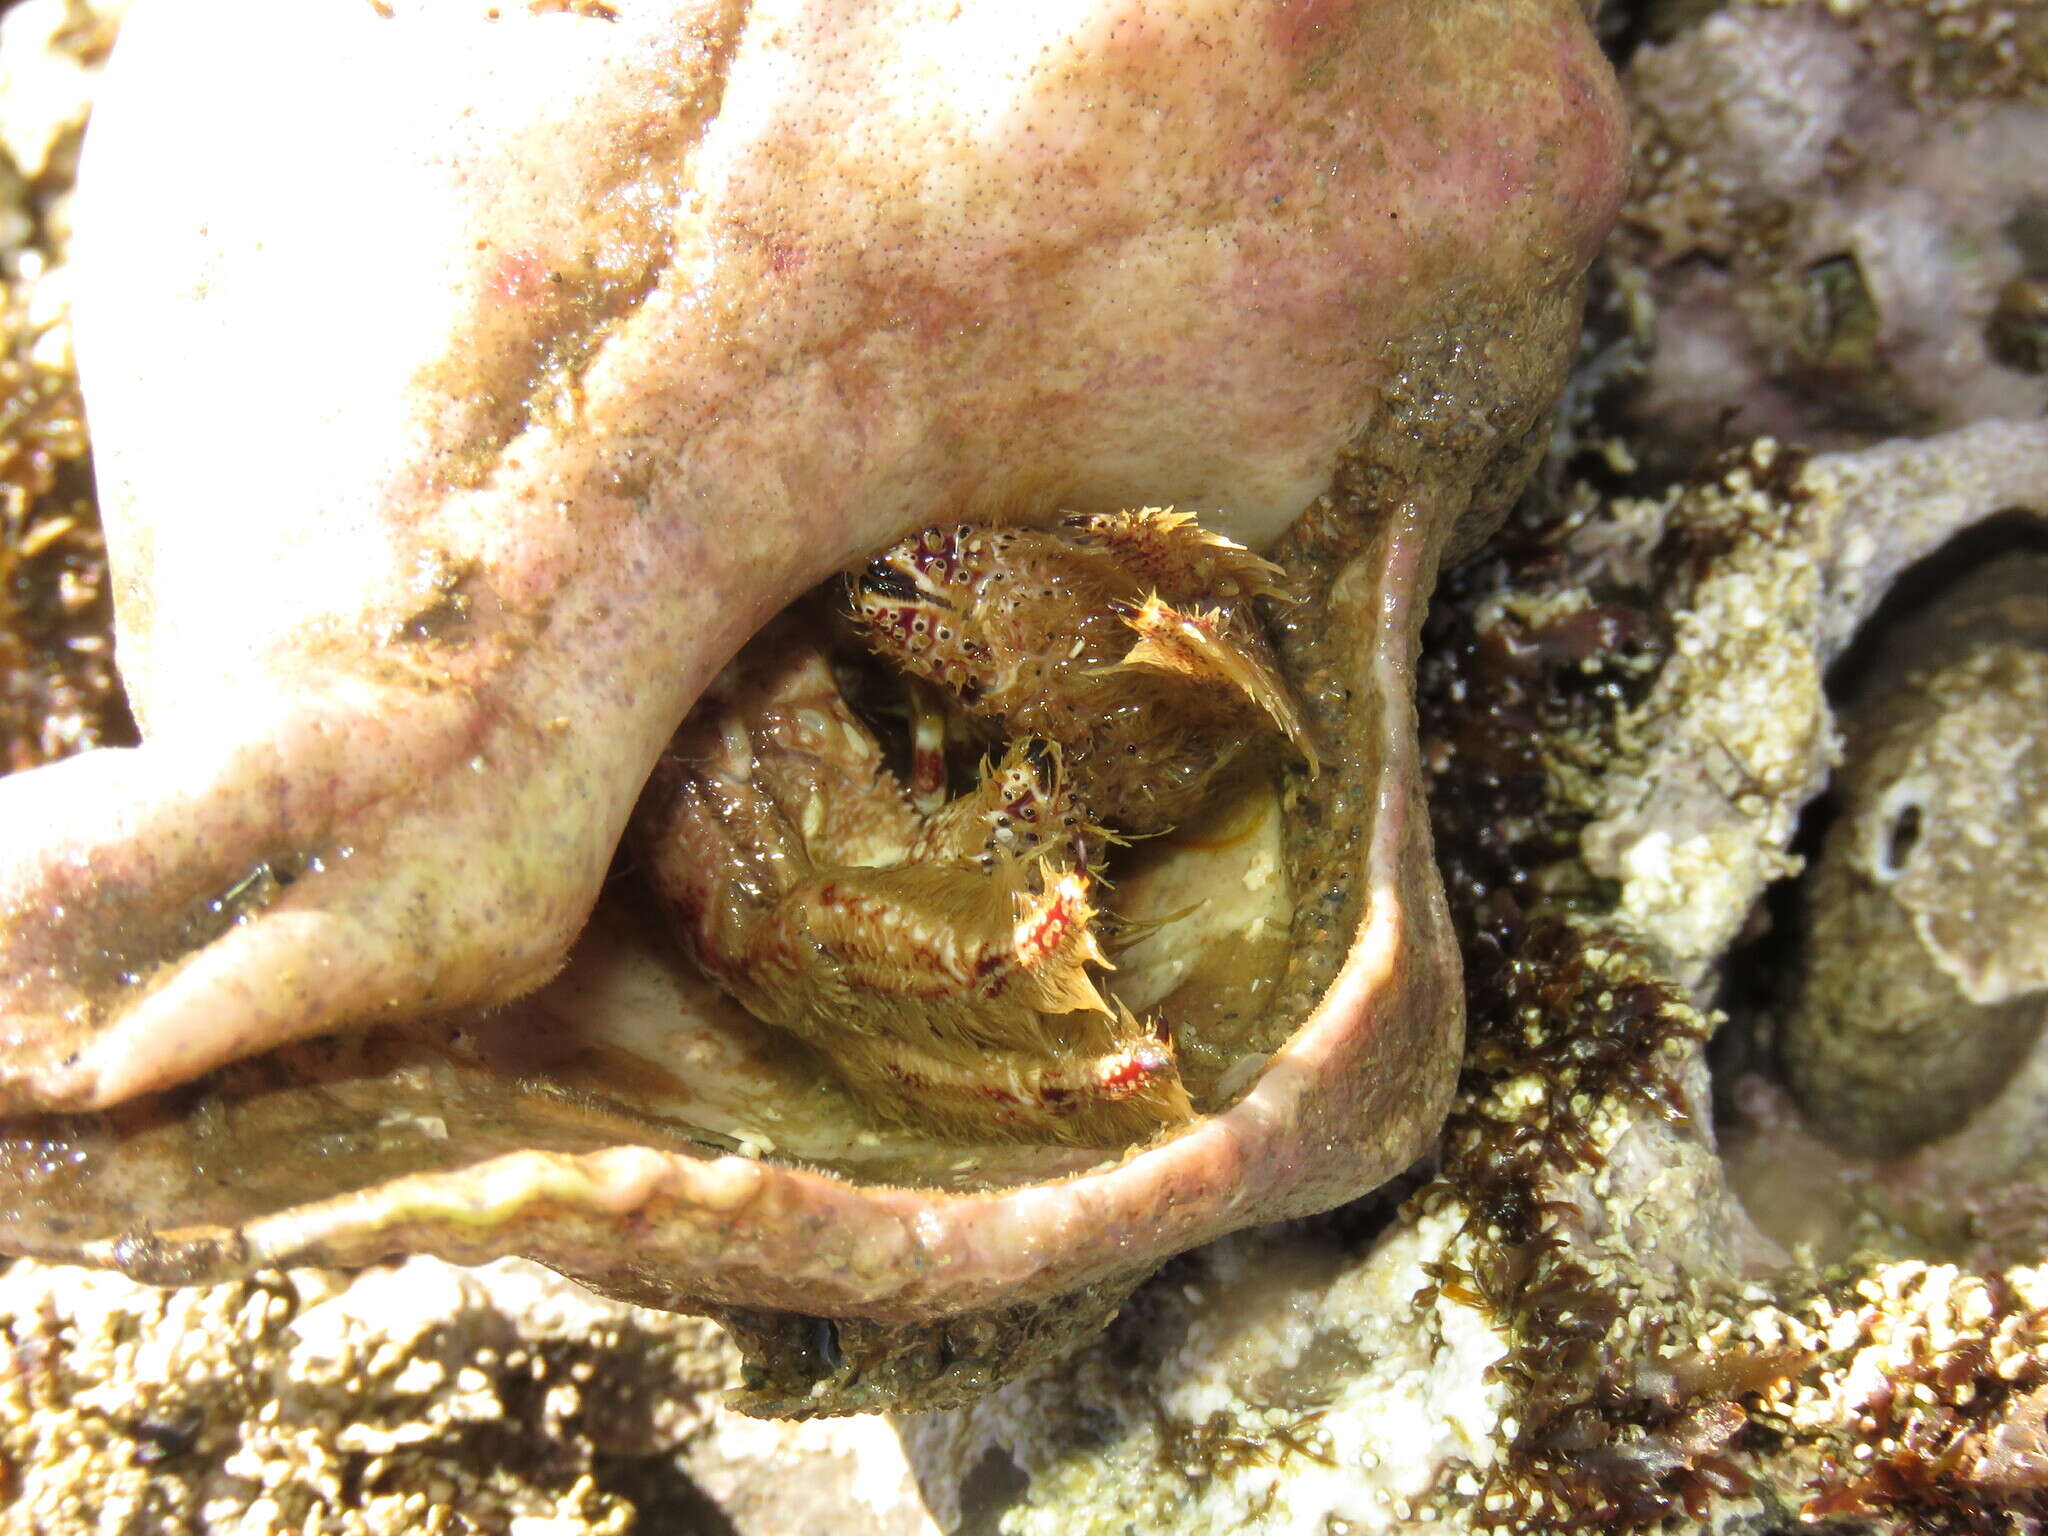 Image of furry hermit crab